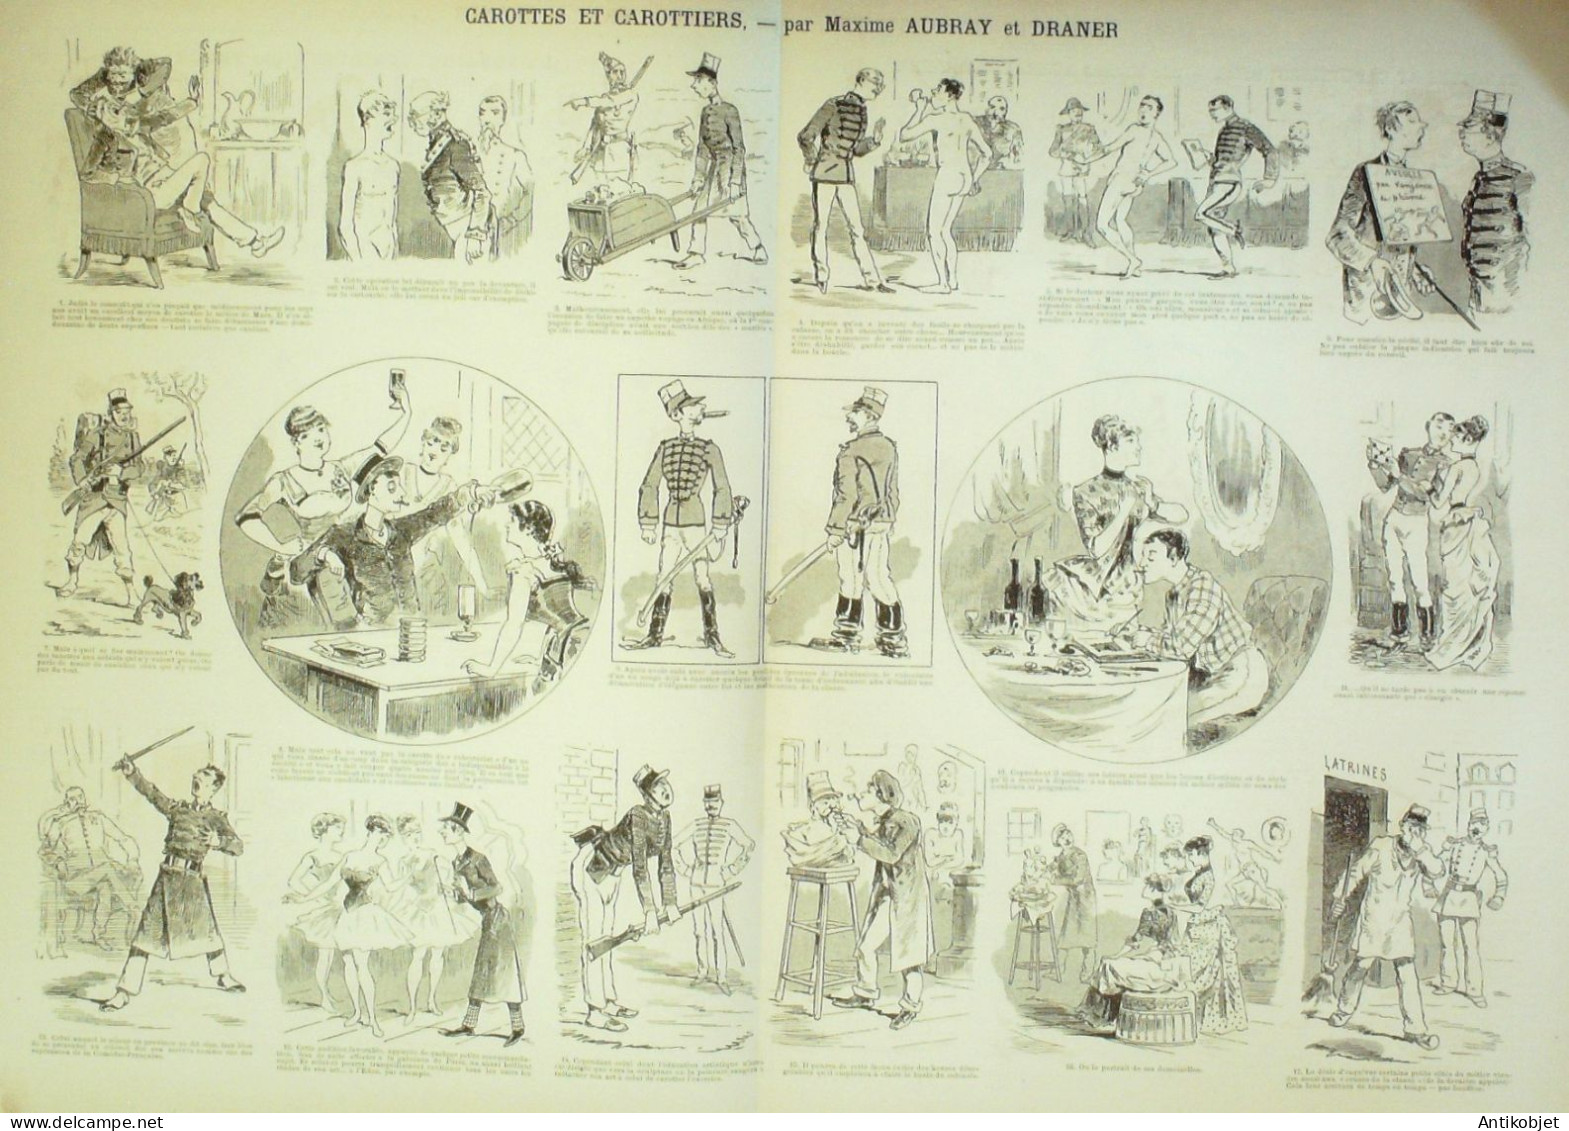 La Caricature 1886 N°347 Carottes & Carottiers Aubray Draner Trock - Magazines - Before 1900